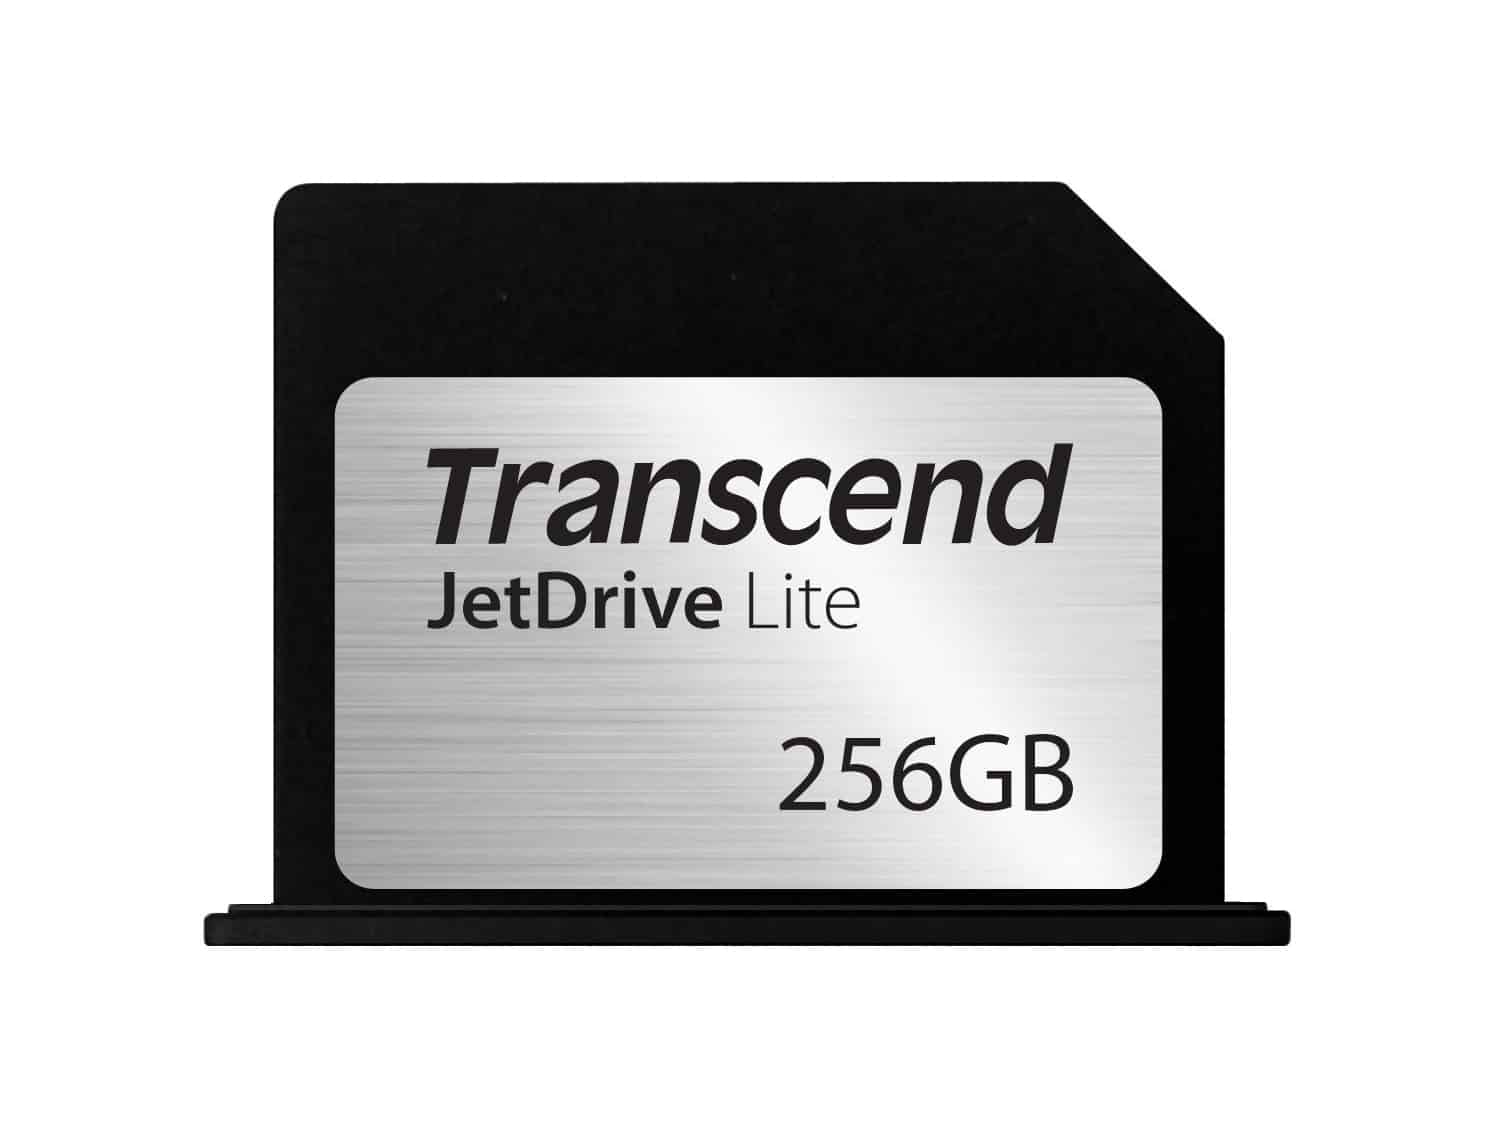 Transcend JetDrive Lite SD Storage Expansion